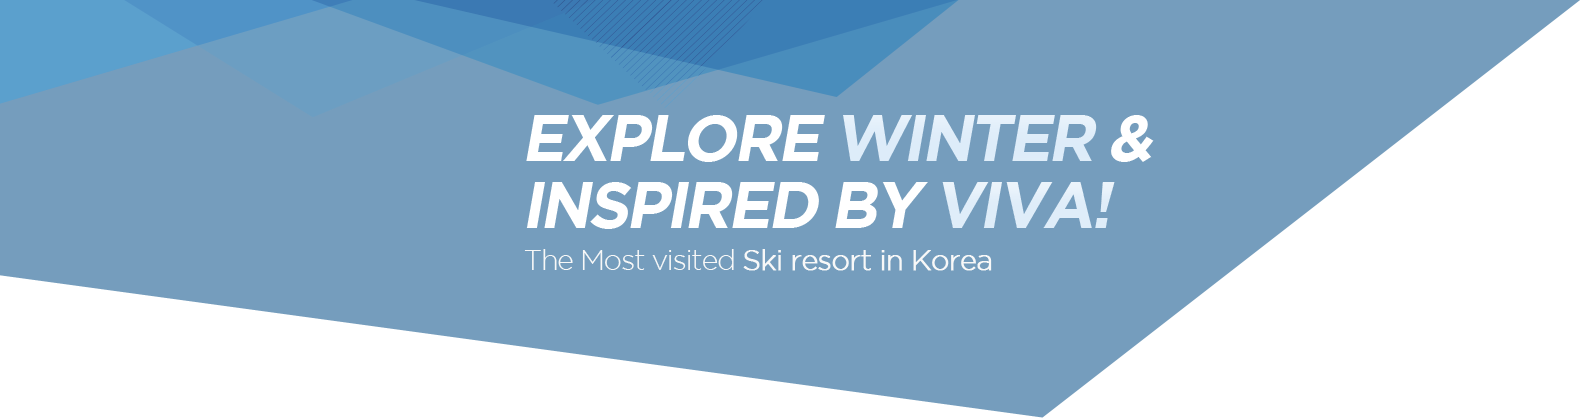 explore winter & inspired by viva!